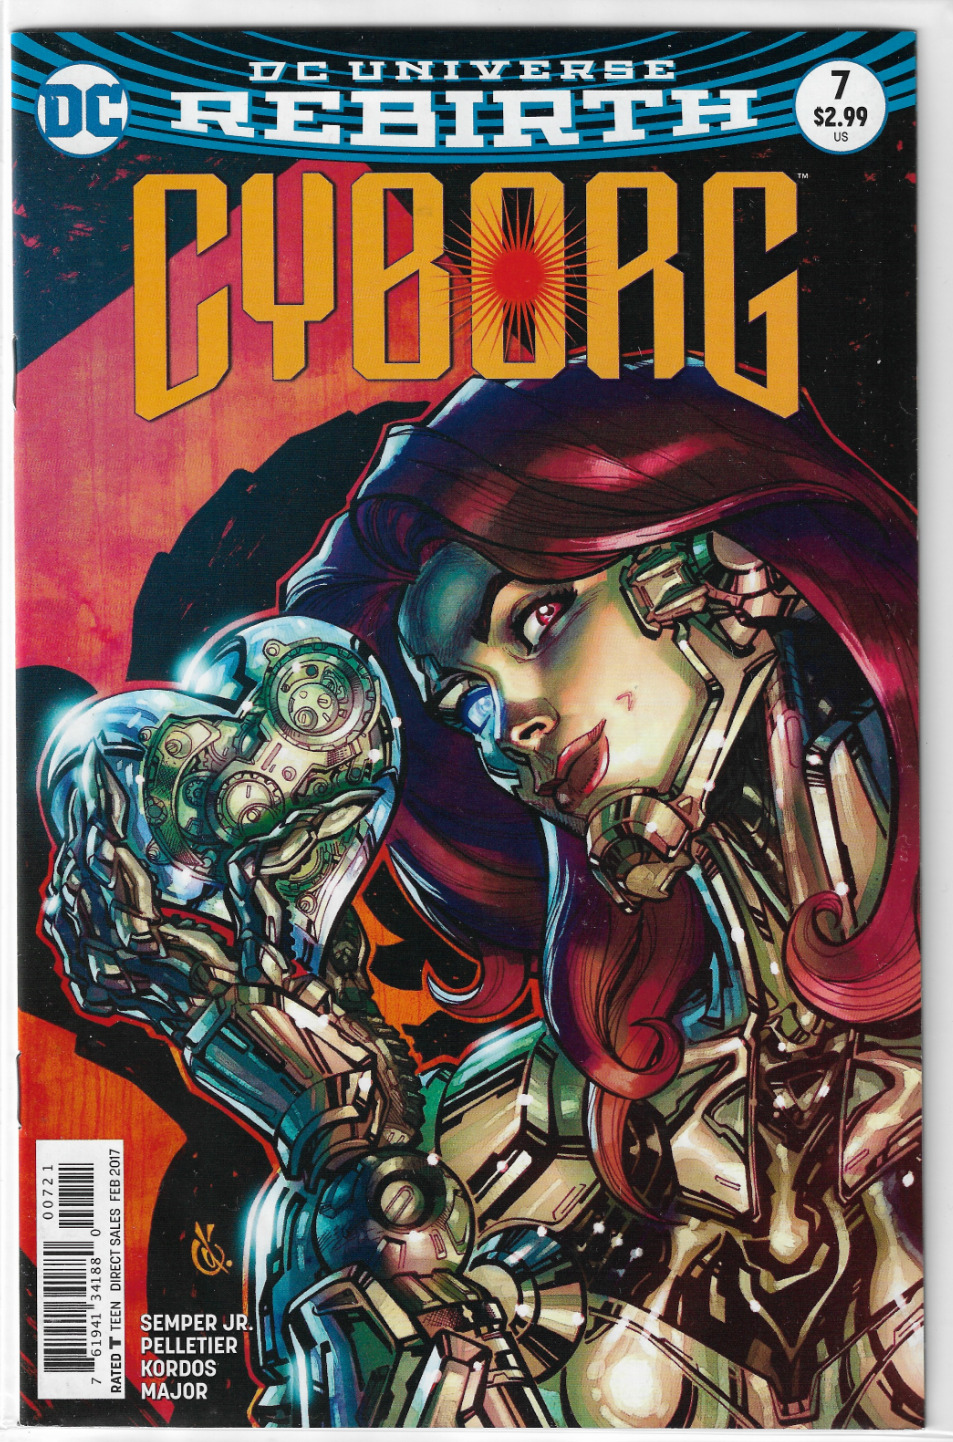 Cyborg (2016) #7 Variant Cover Rebirth DC Comics Justice League